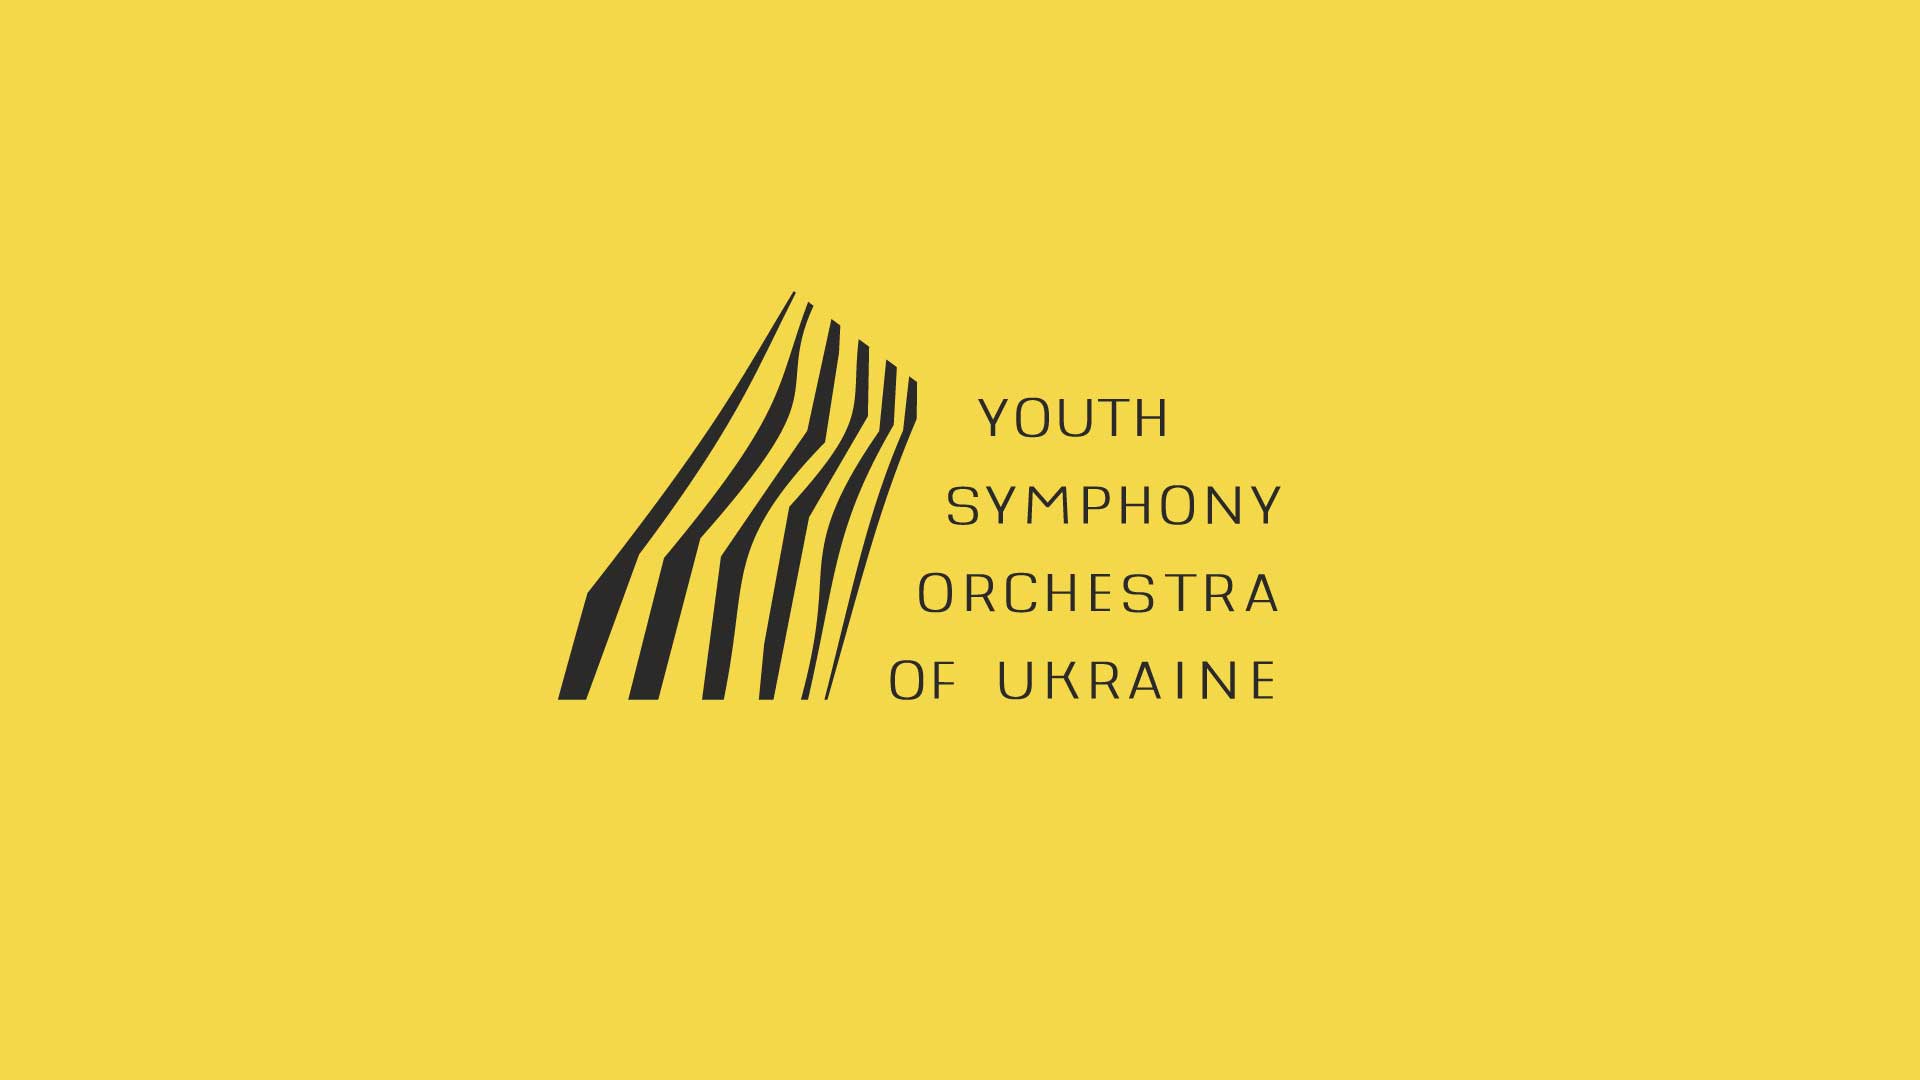 Youth Symphony Orchestra of Ukraine